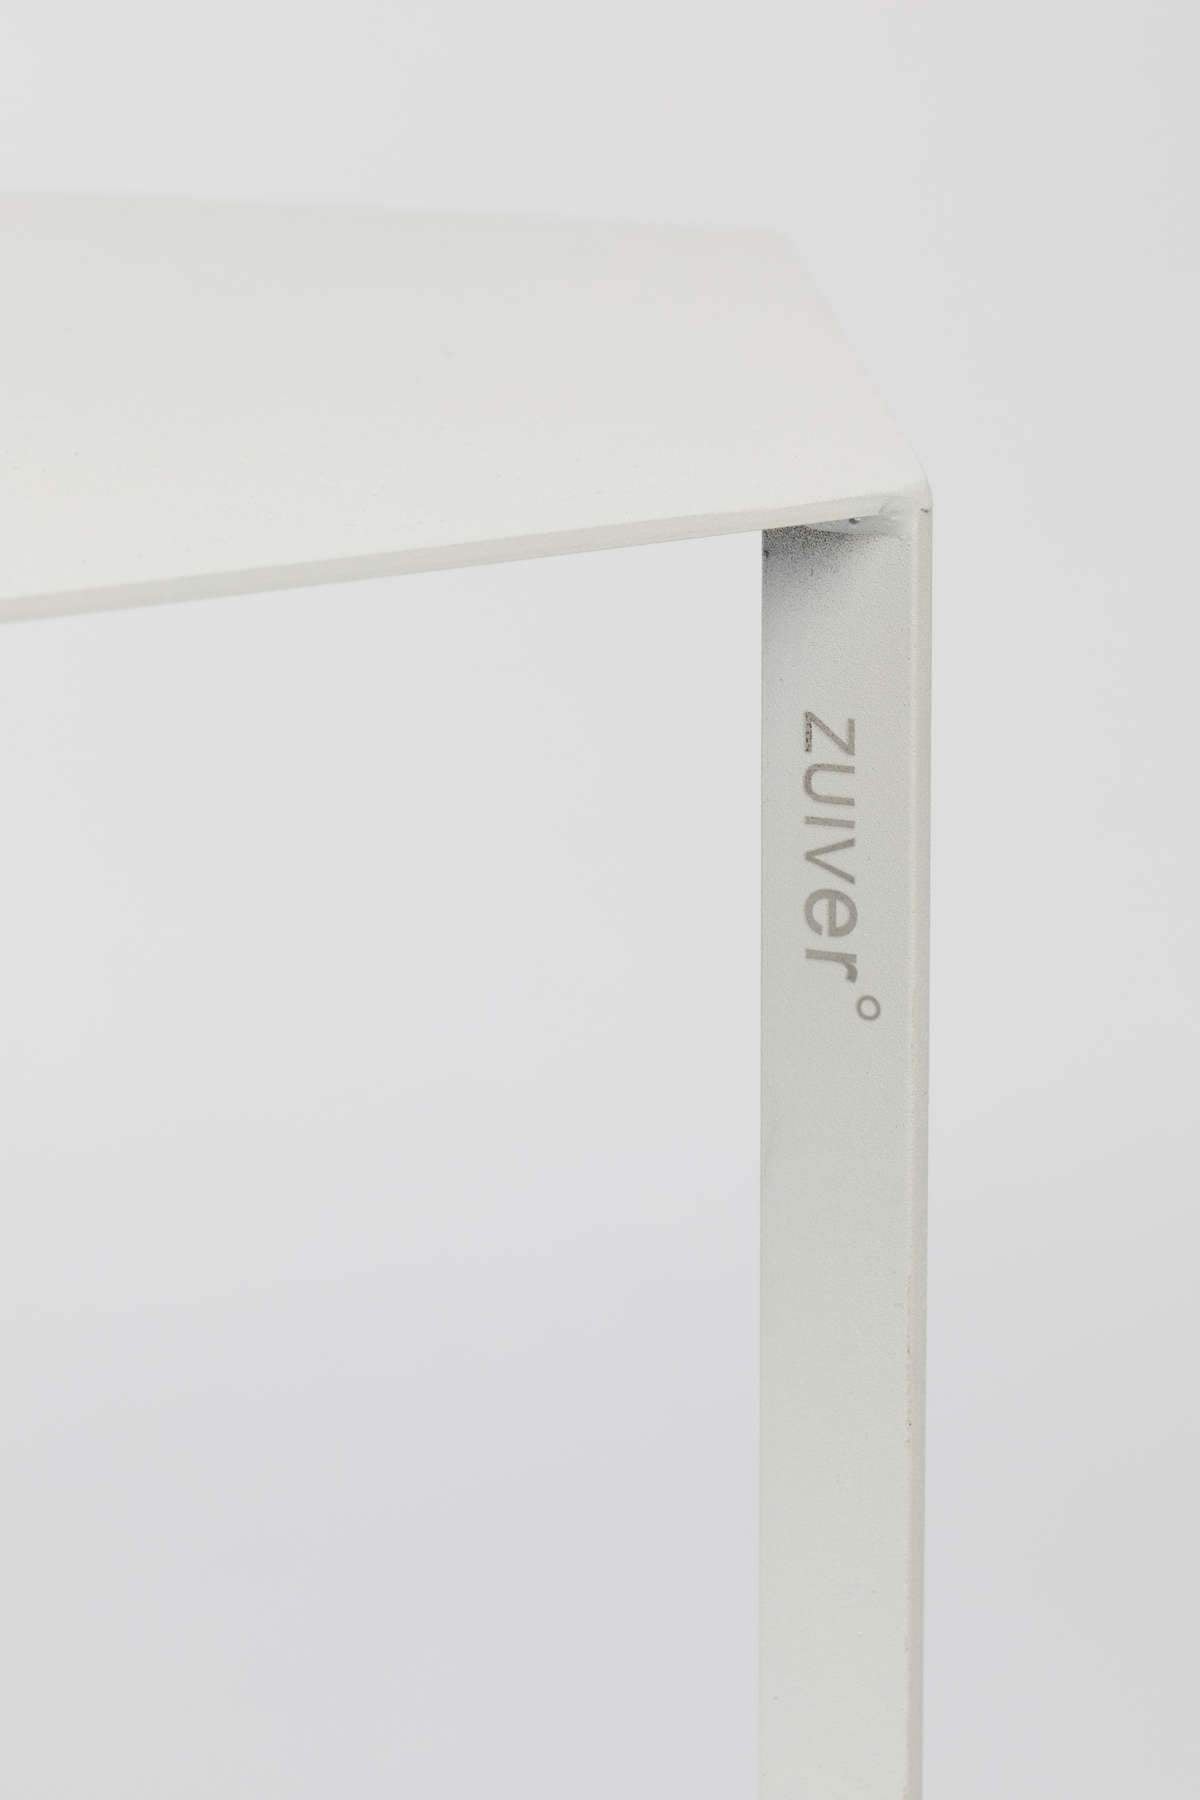 Coffee table MATRIX white, Zuiver, Eye on Design